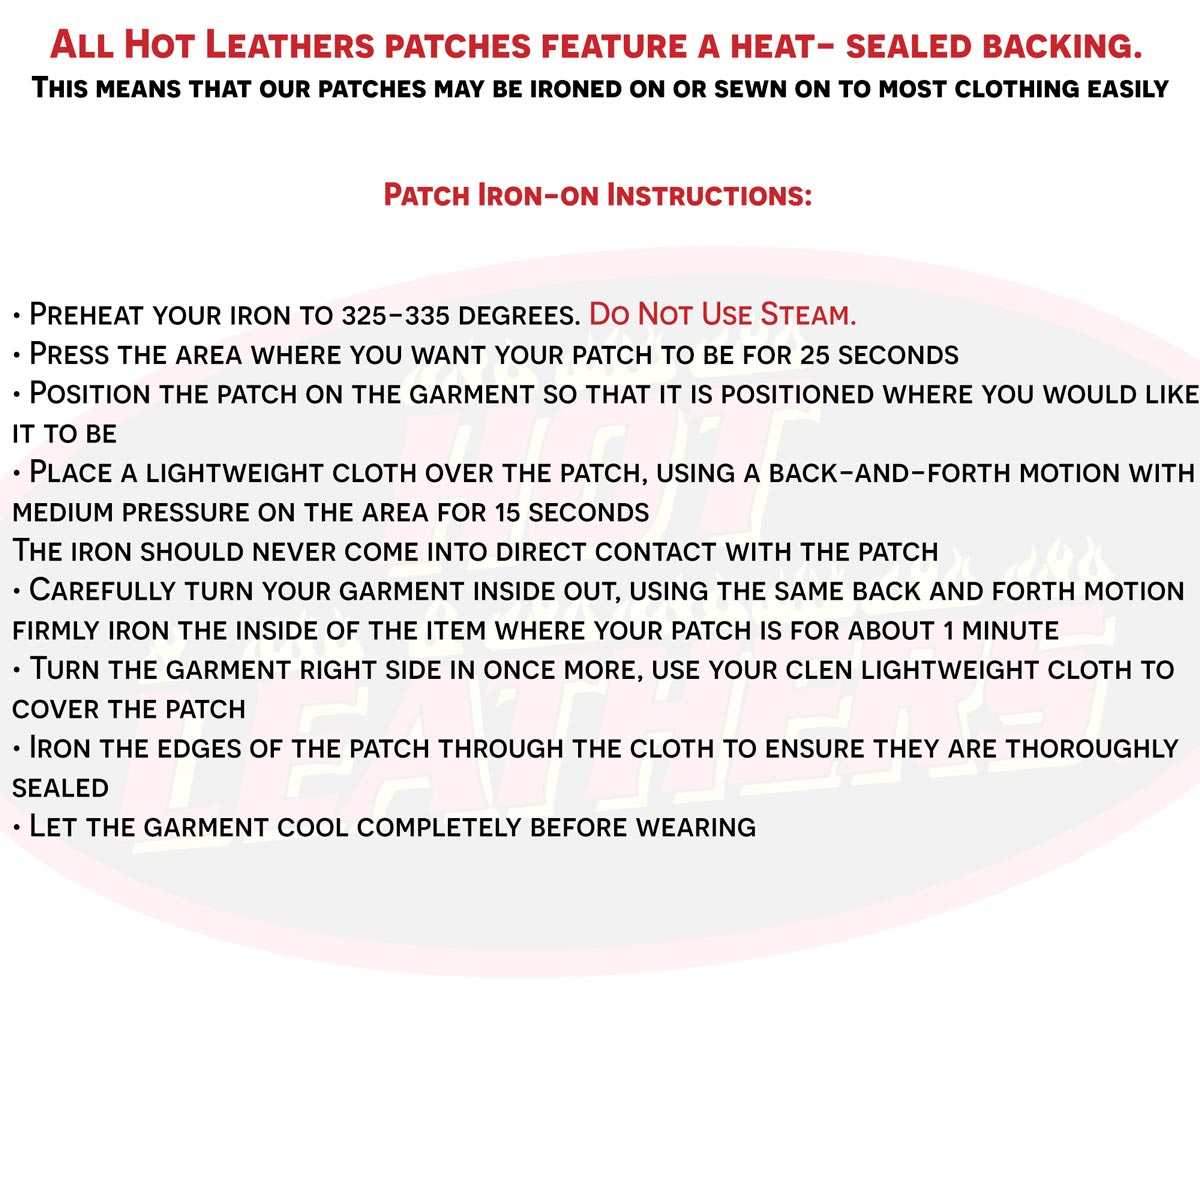 Hot Leathers PPL9666 Excellent Condition 4"x2" Patch